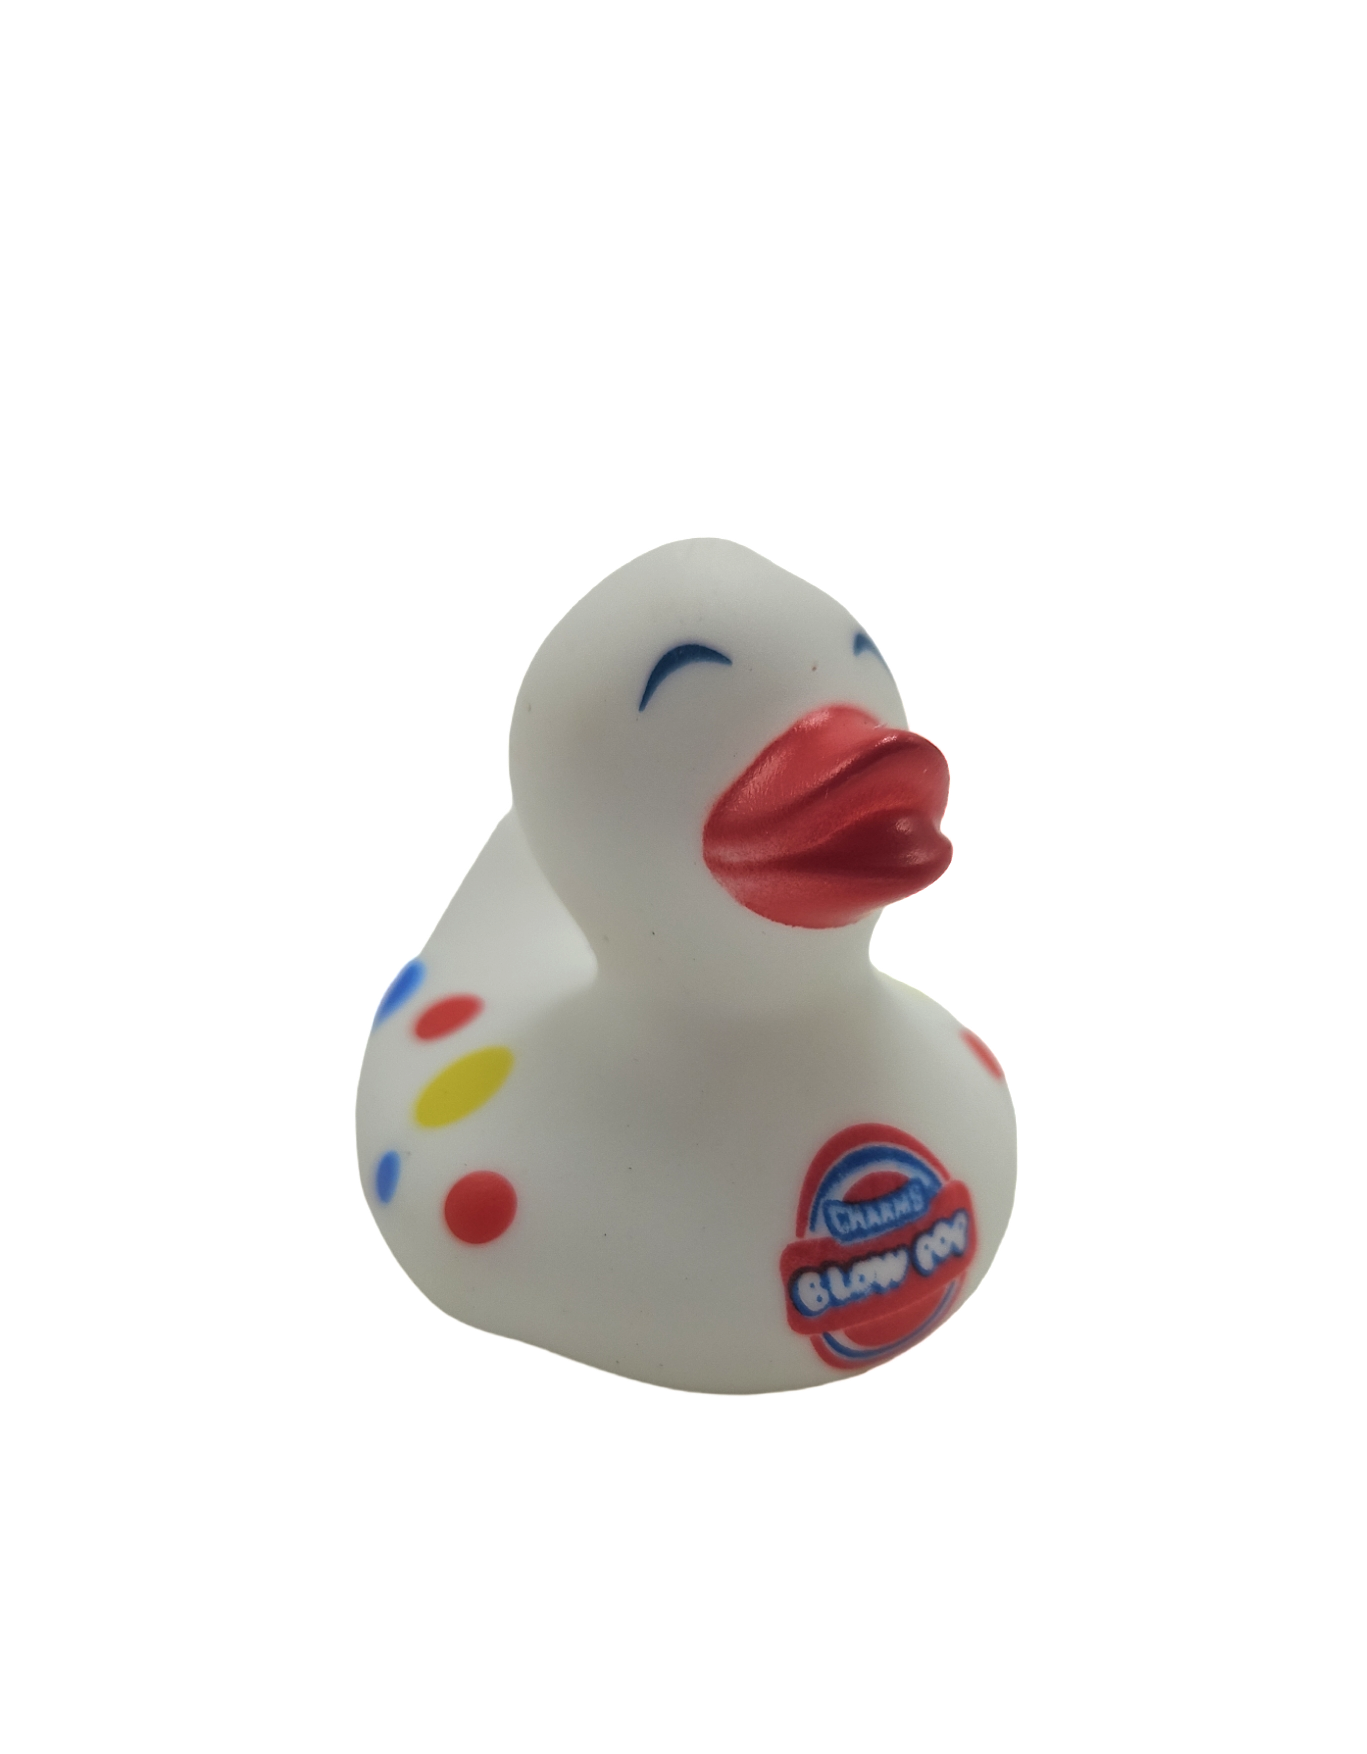 10 Charms Blow Pop Candy Ducks - 2" Rubber Ducks